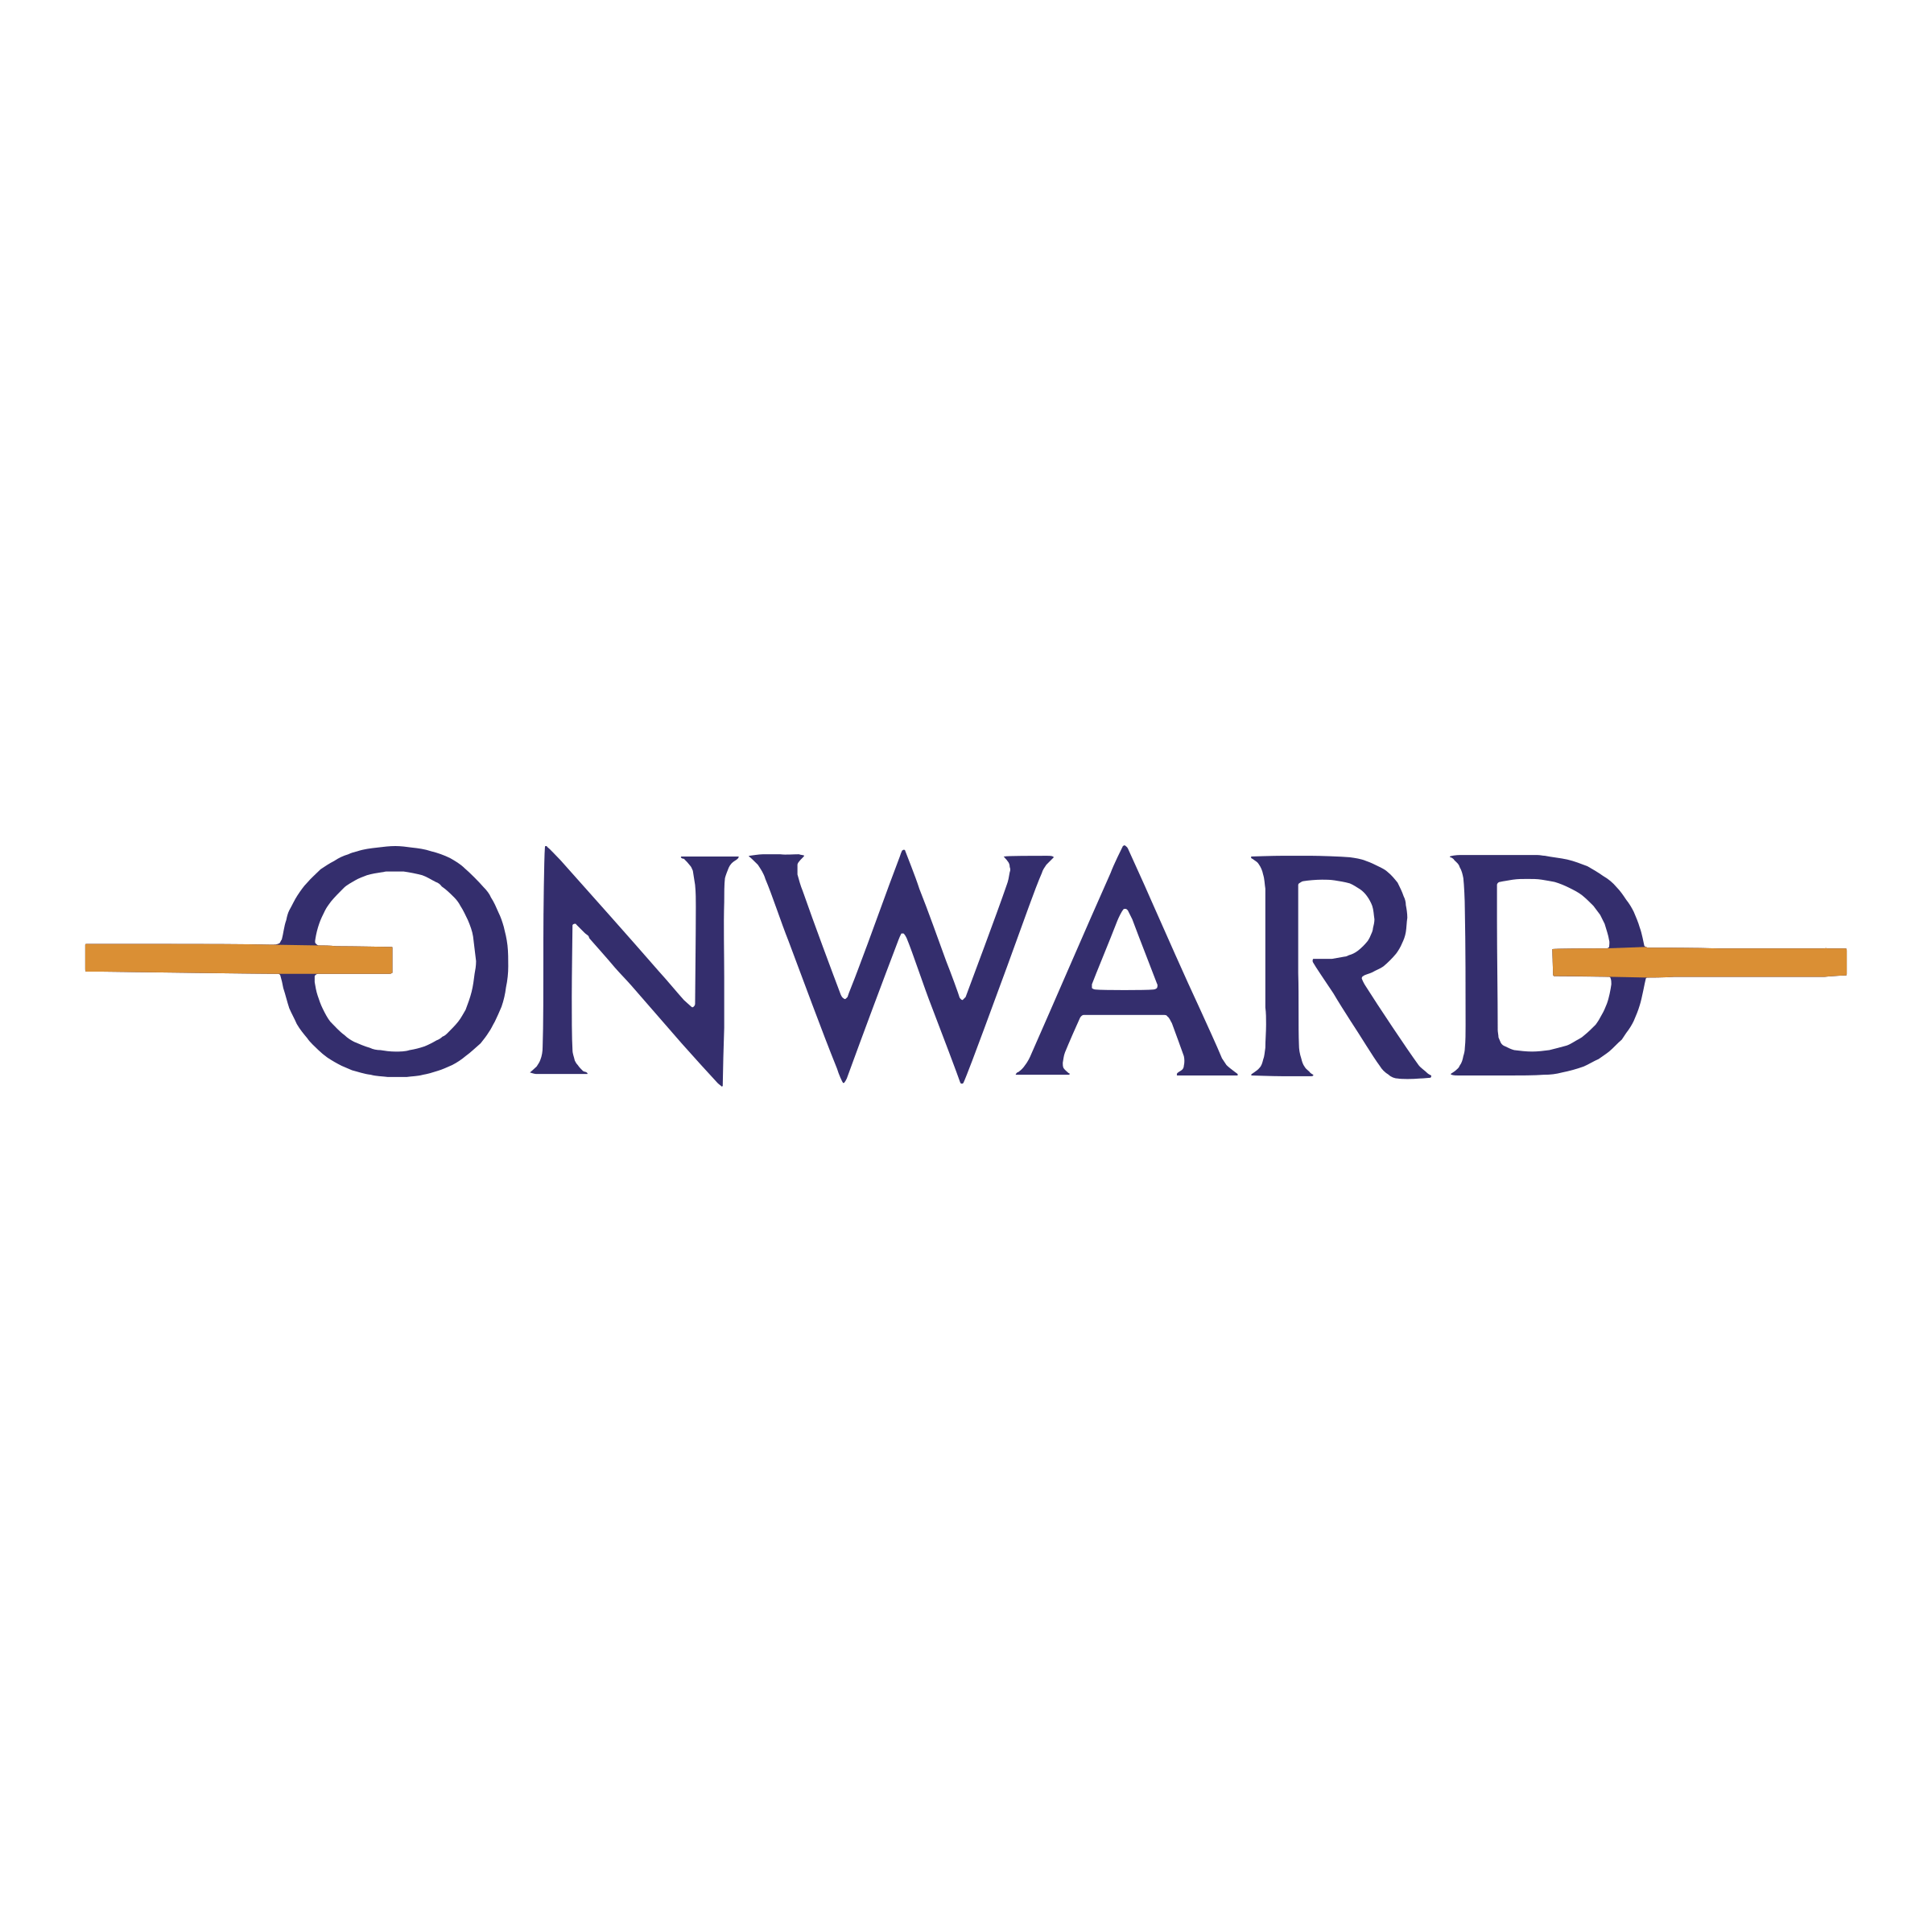 Onward Logo - Onward Logo PNG Transparent & SVG Vector - Freebie Supply